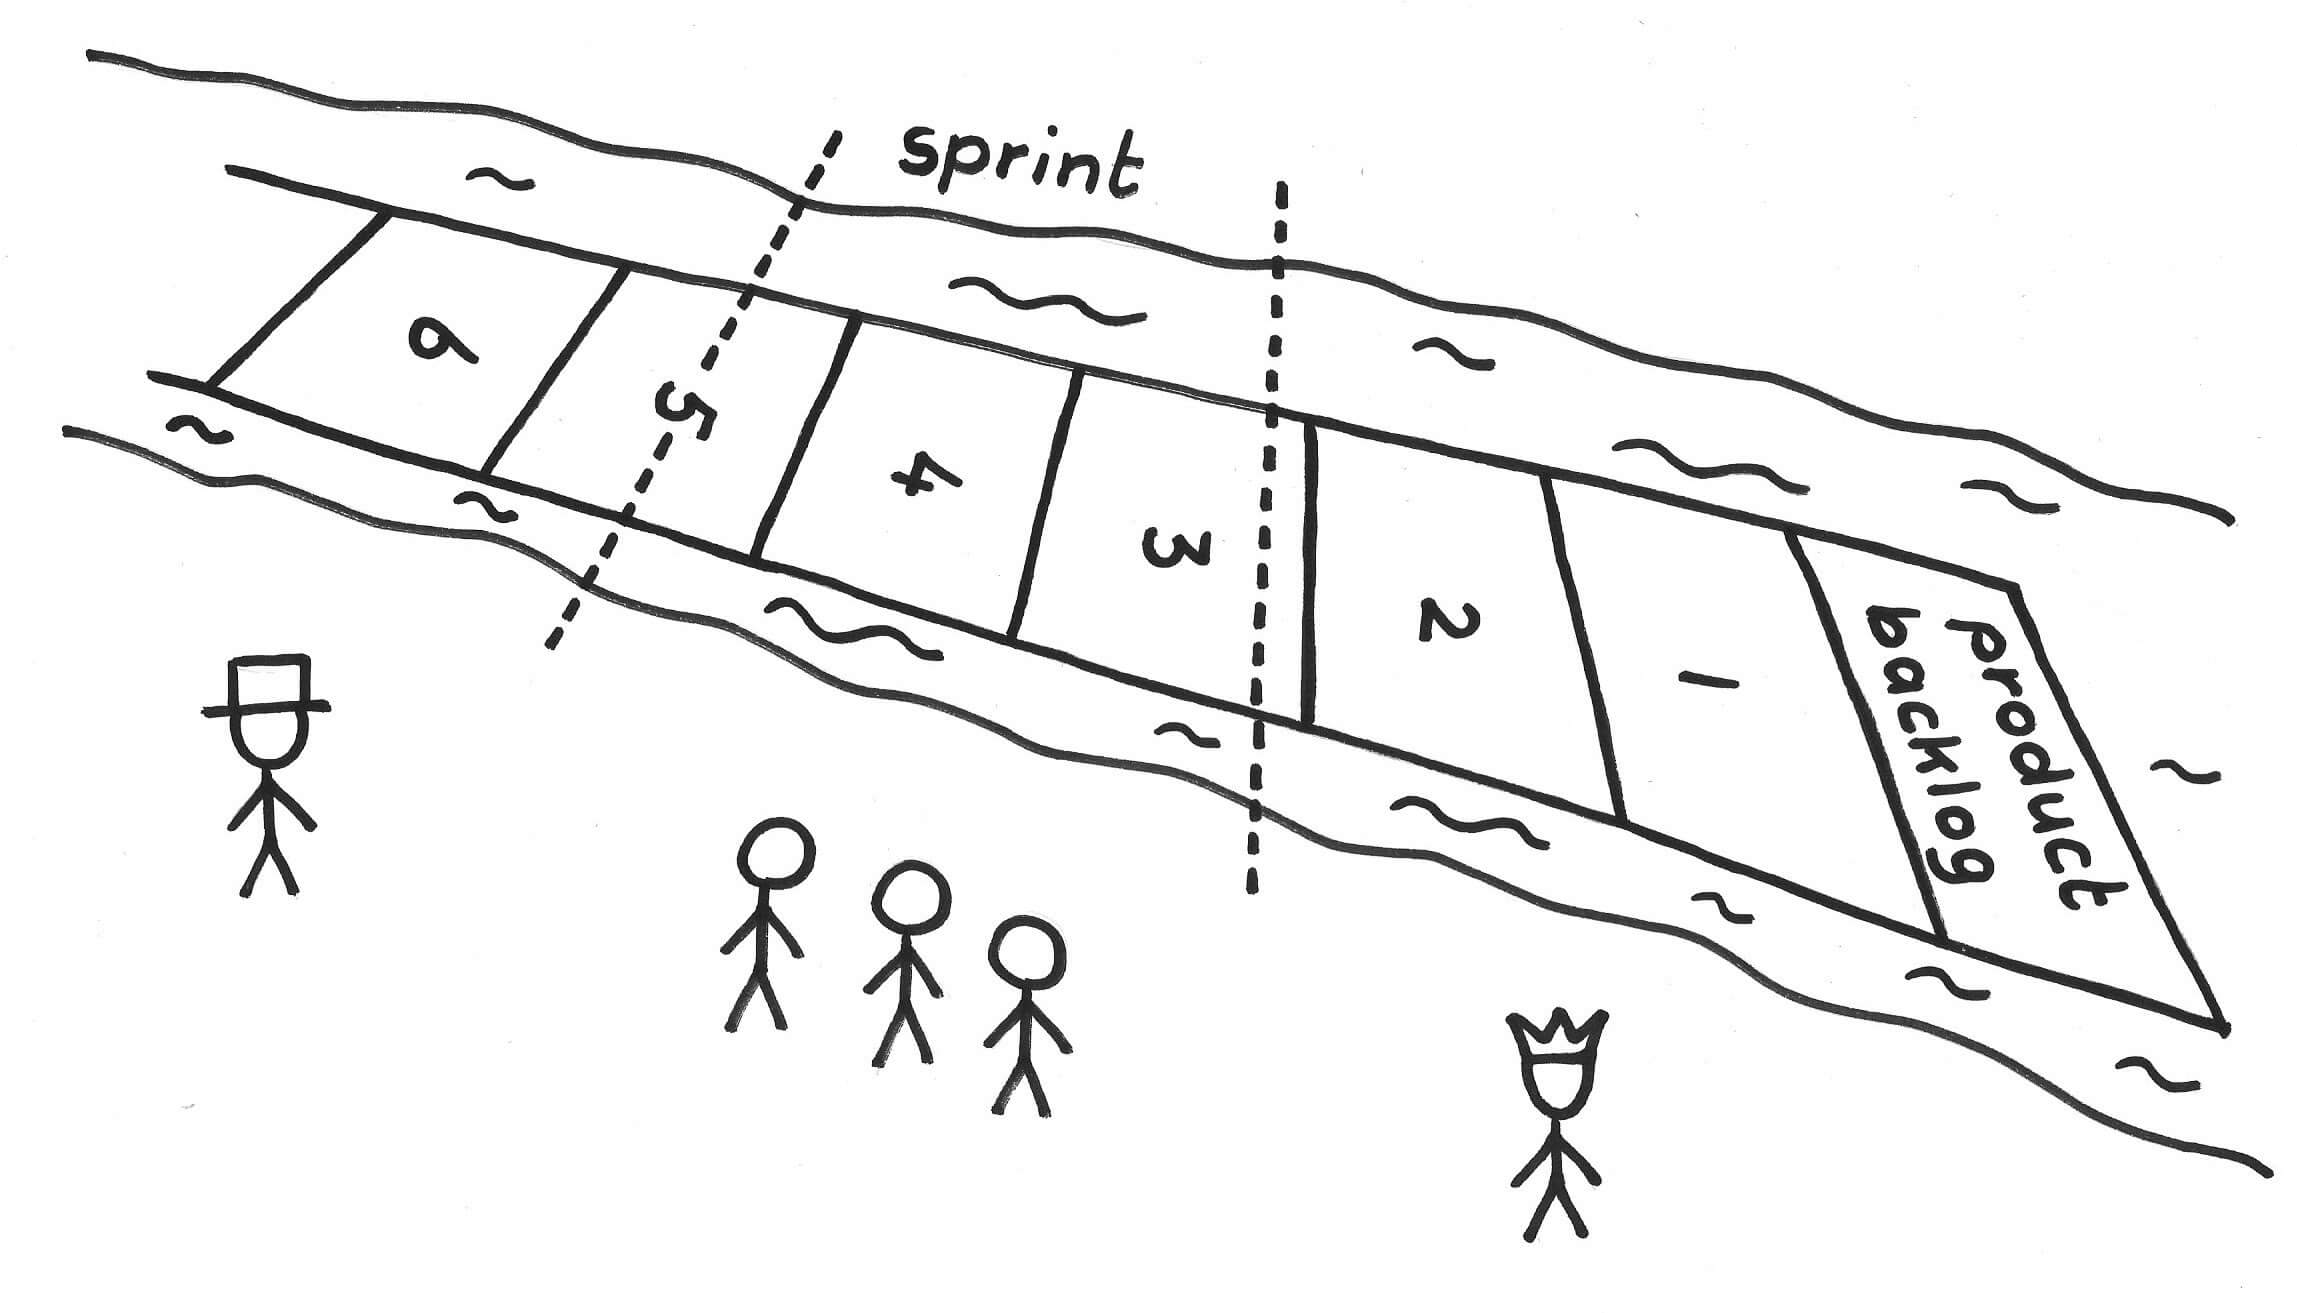 sprintplanning_pre